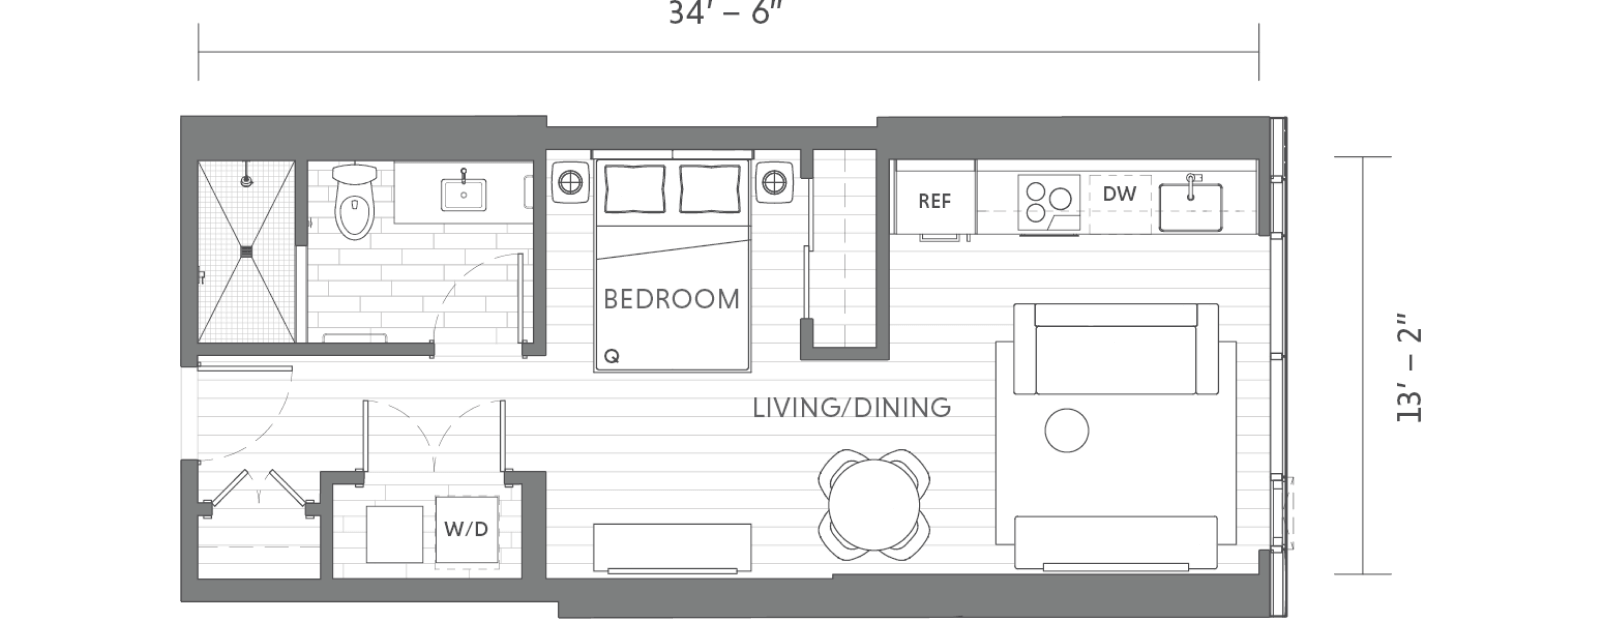 Residence 34 floor plan